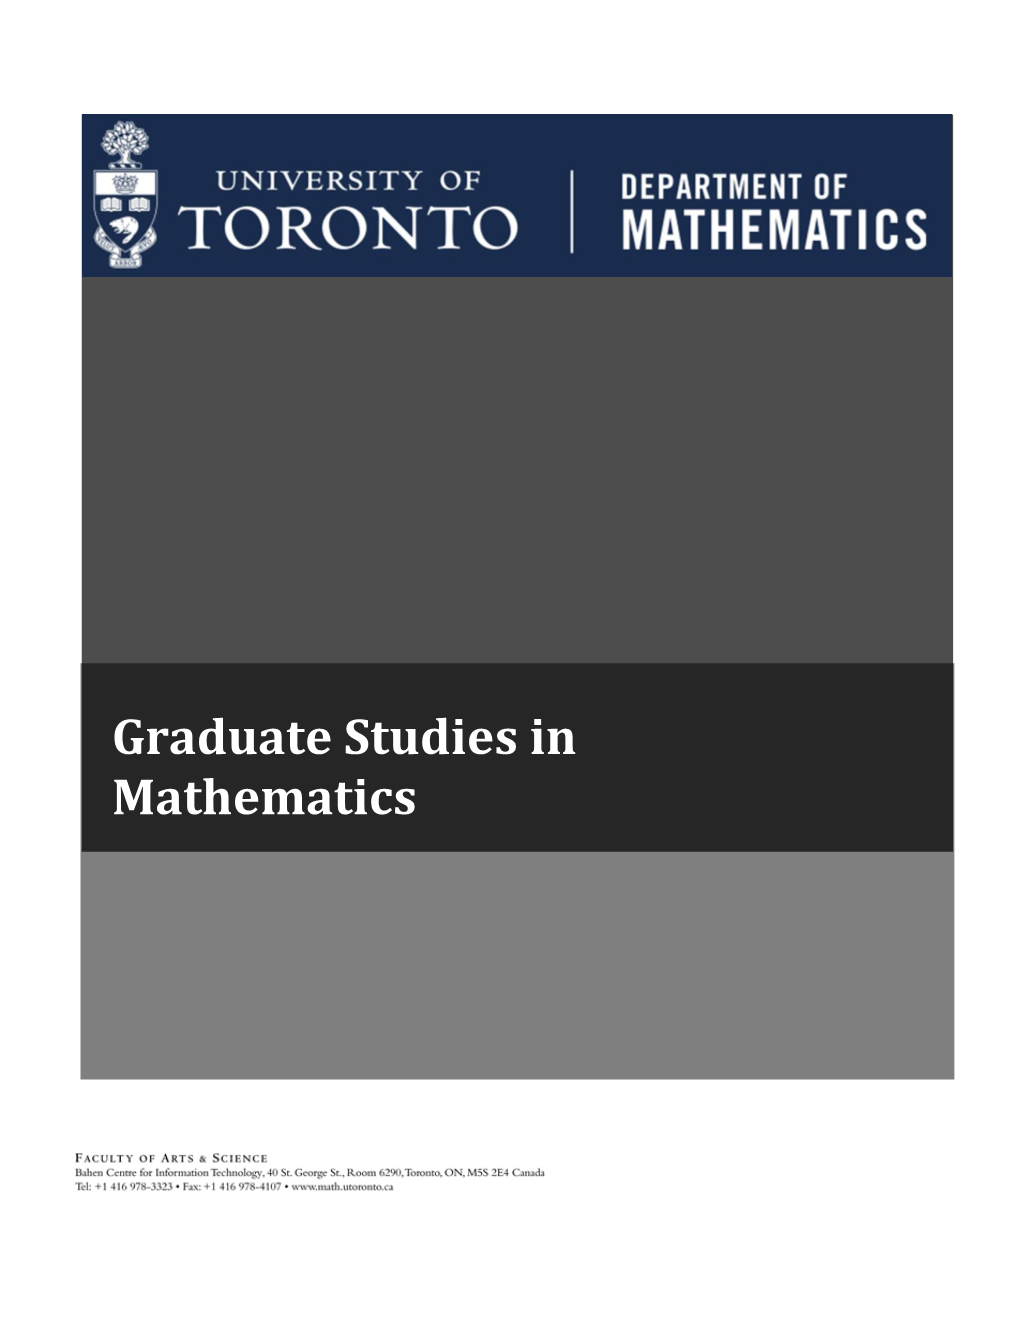 Graduate Studies in Mathematics Table of Contents